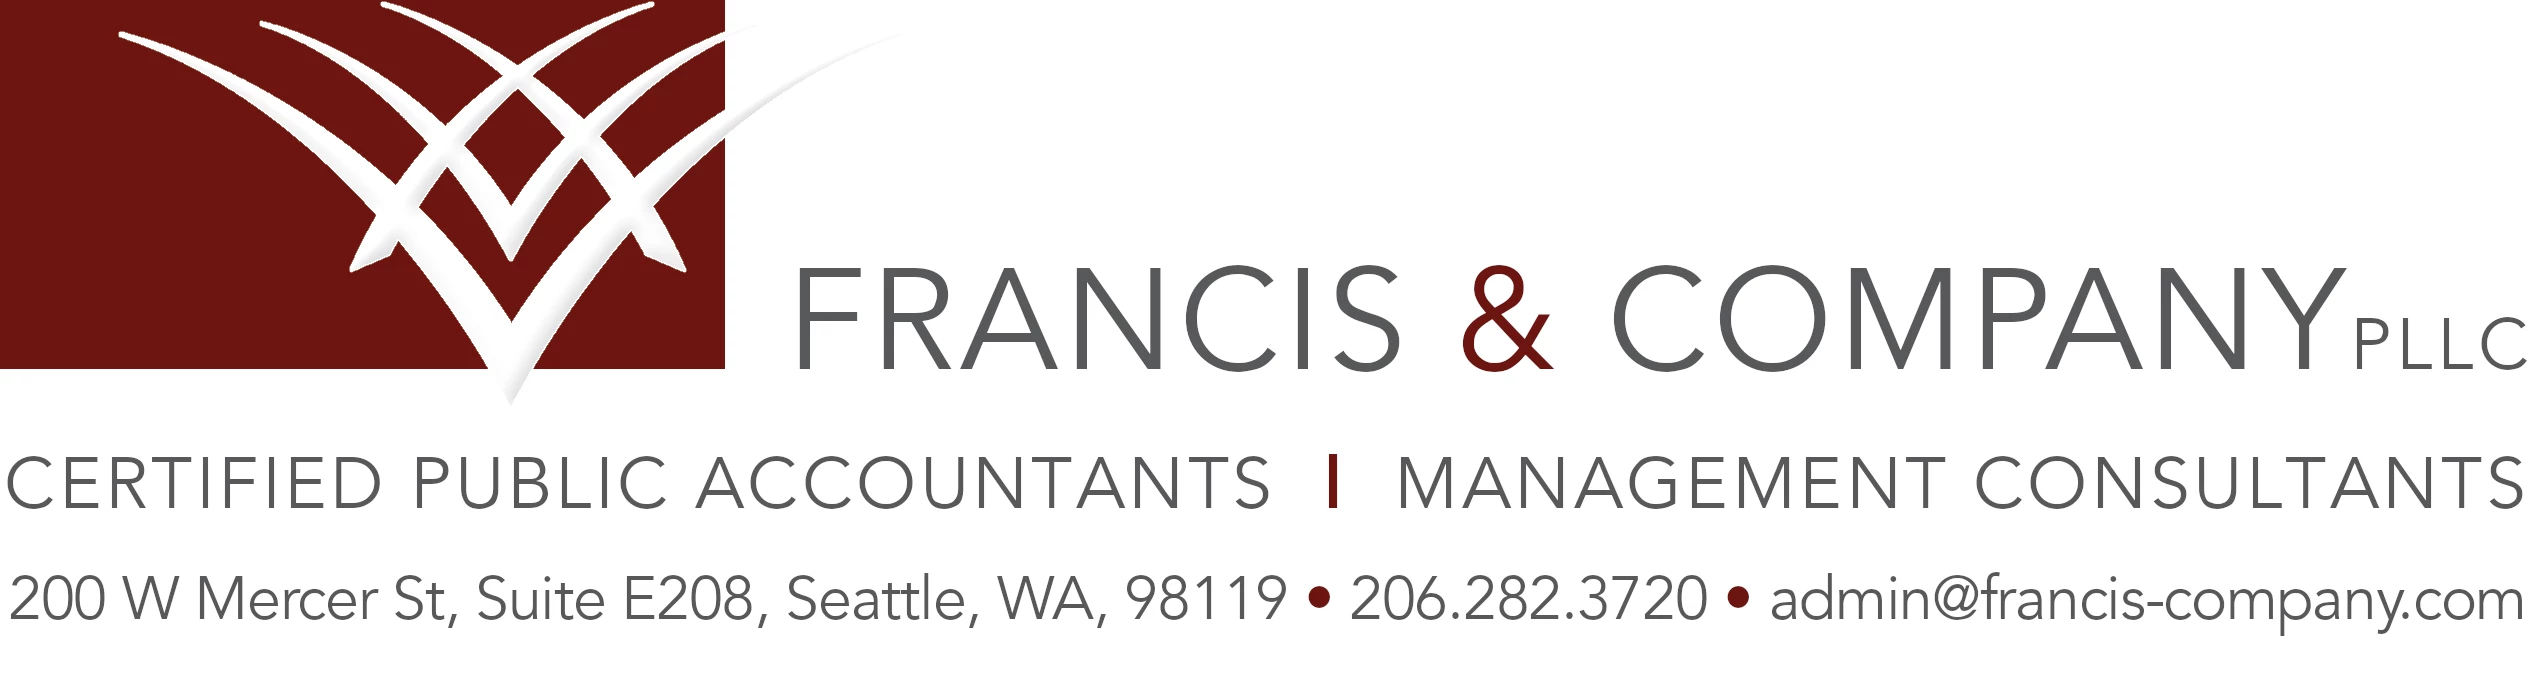 359-239-francis-company-logo.png